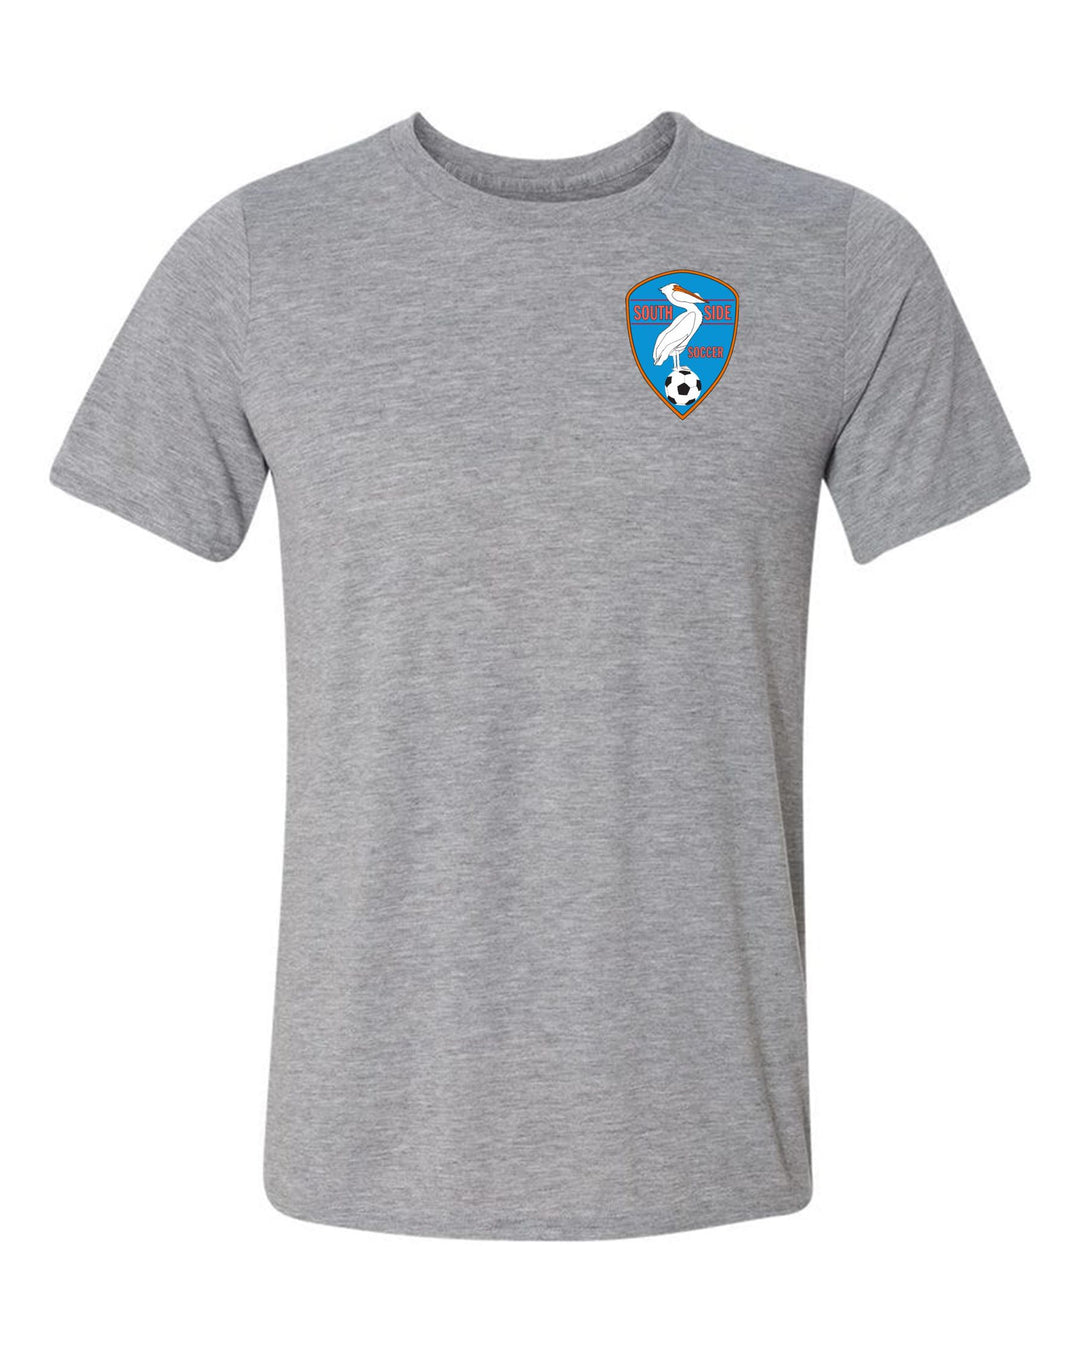 Southside Youth Soccer Short Sleeve T-Shirt SYS Spiritwear SPORT GREY YOUTH MEDIUM - Third Coast Soccer